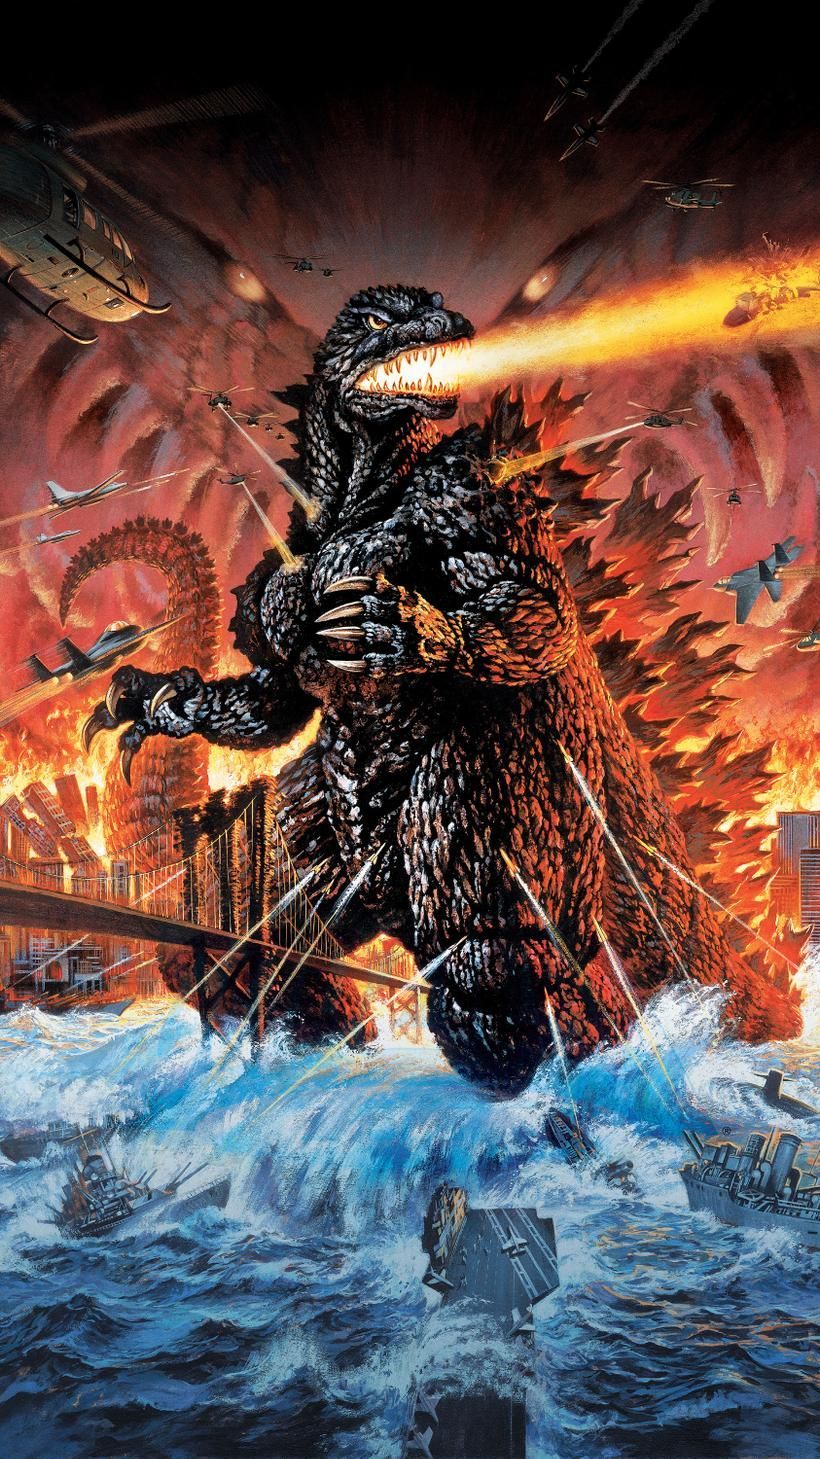 Godzilla Vs King Ghidorah Wallpapers